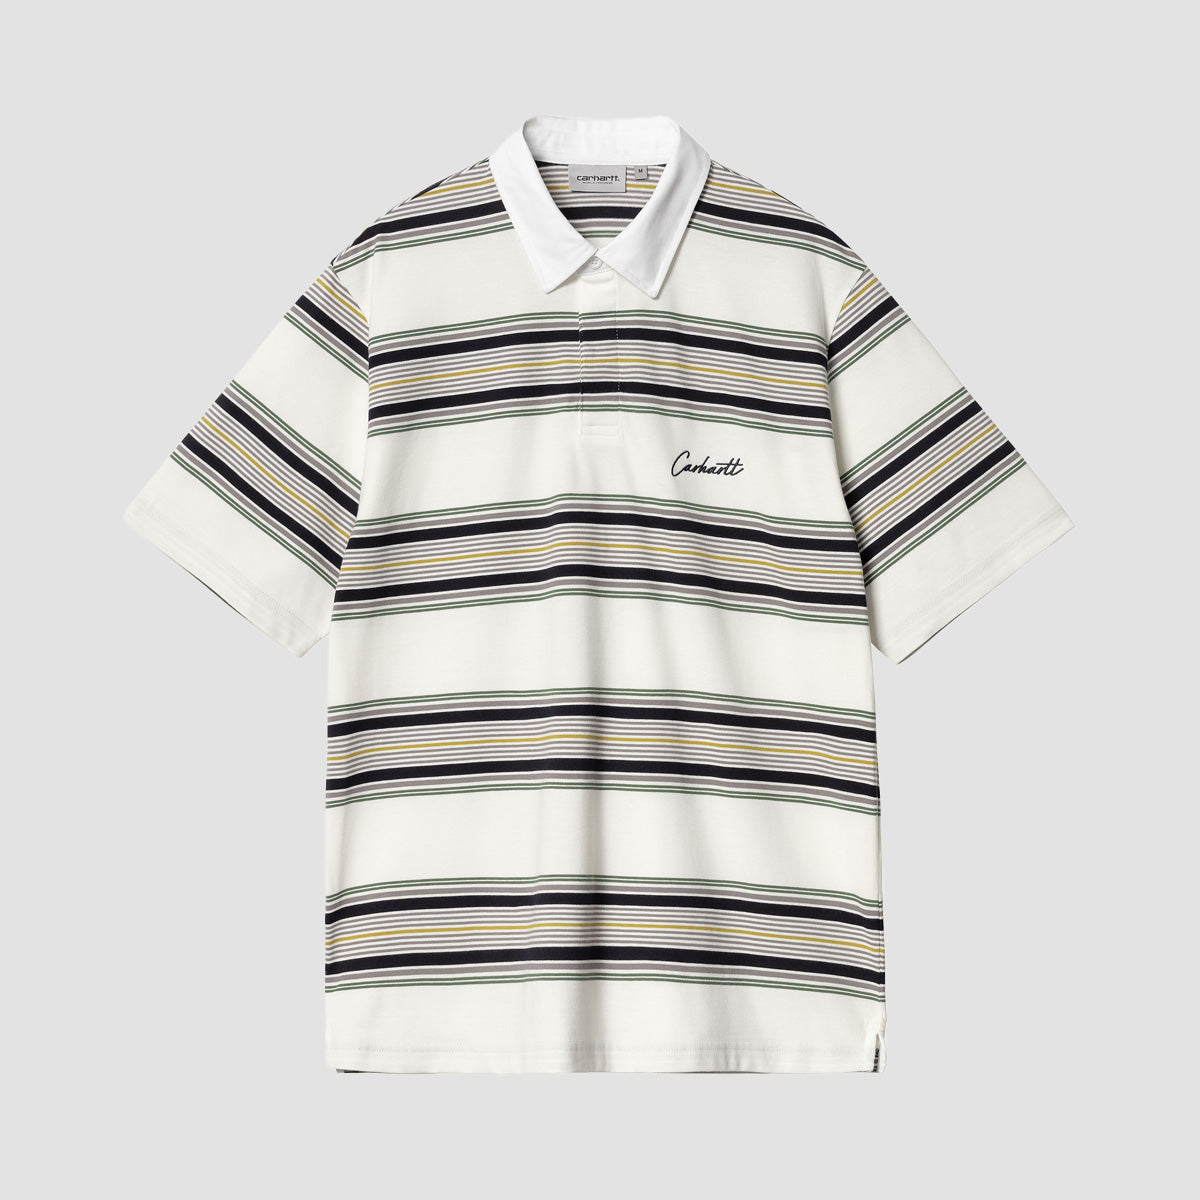 Carhartt WIP Gaines Short Sleeve Rugby Shirt Gaines Stripe/Wax